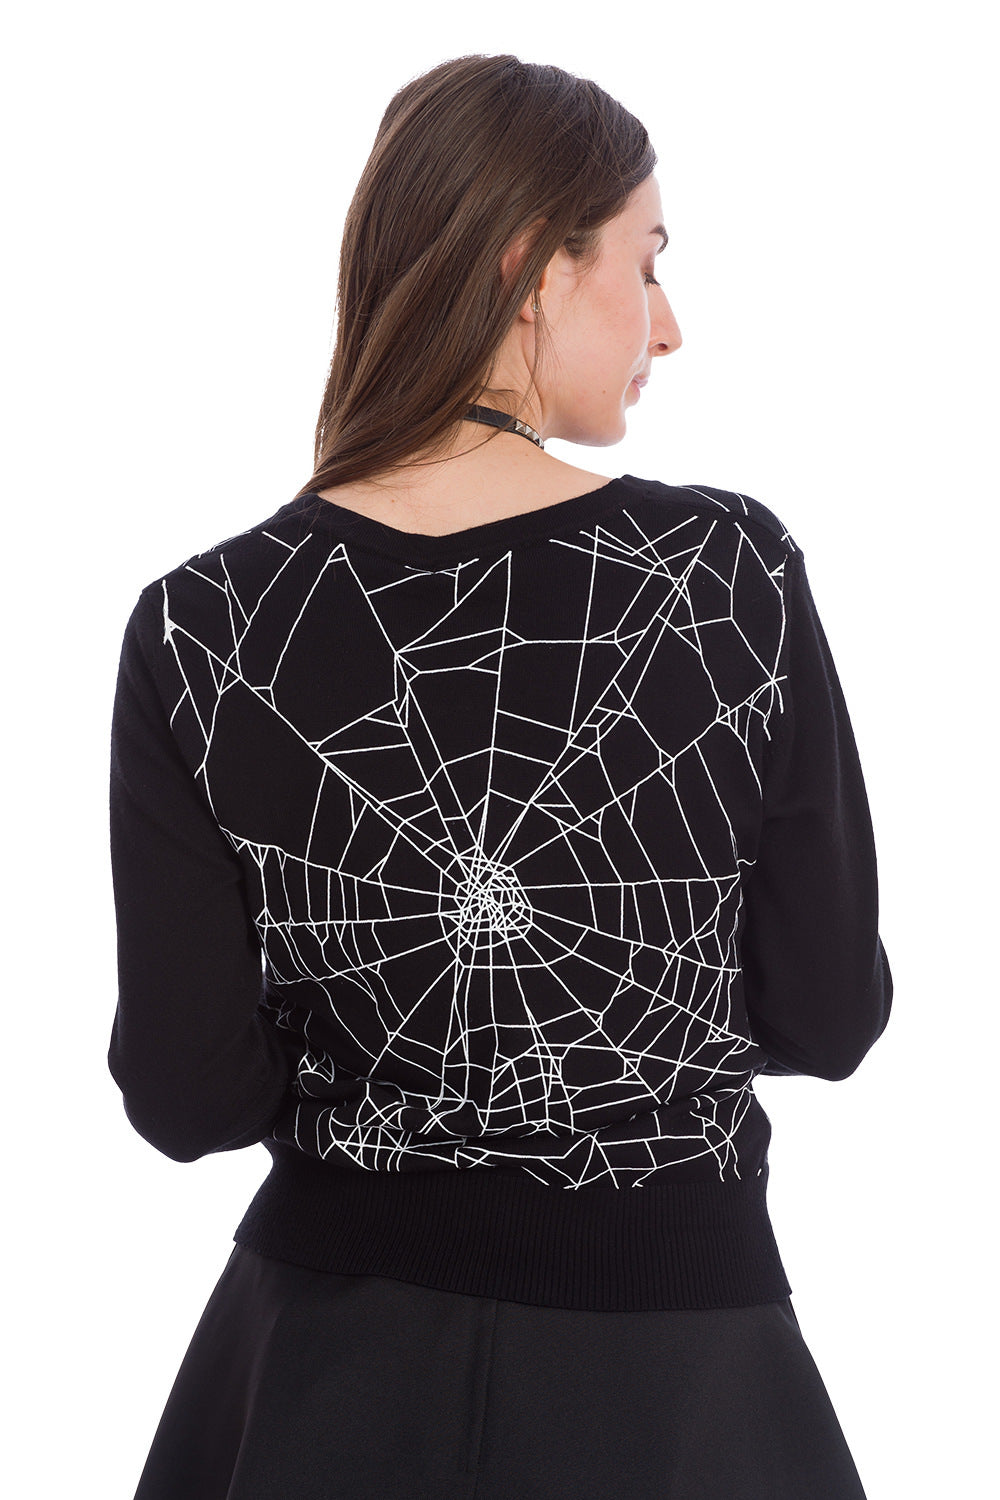 Banned Alternative Creepy Spider Web Cardigan Black